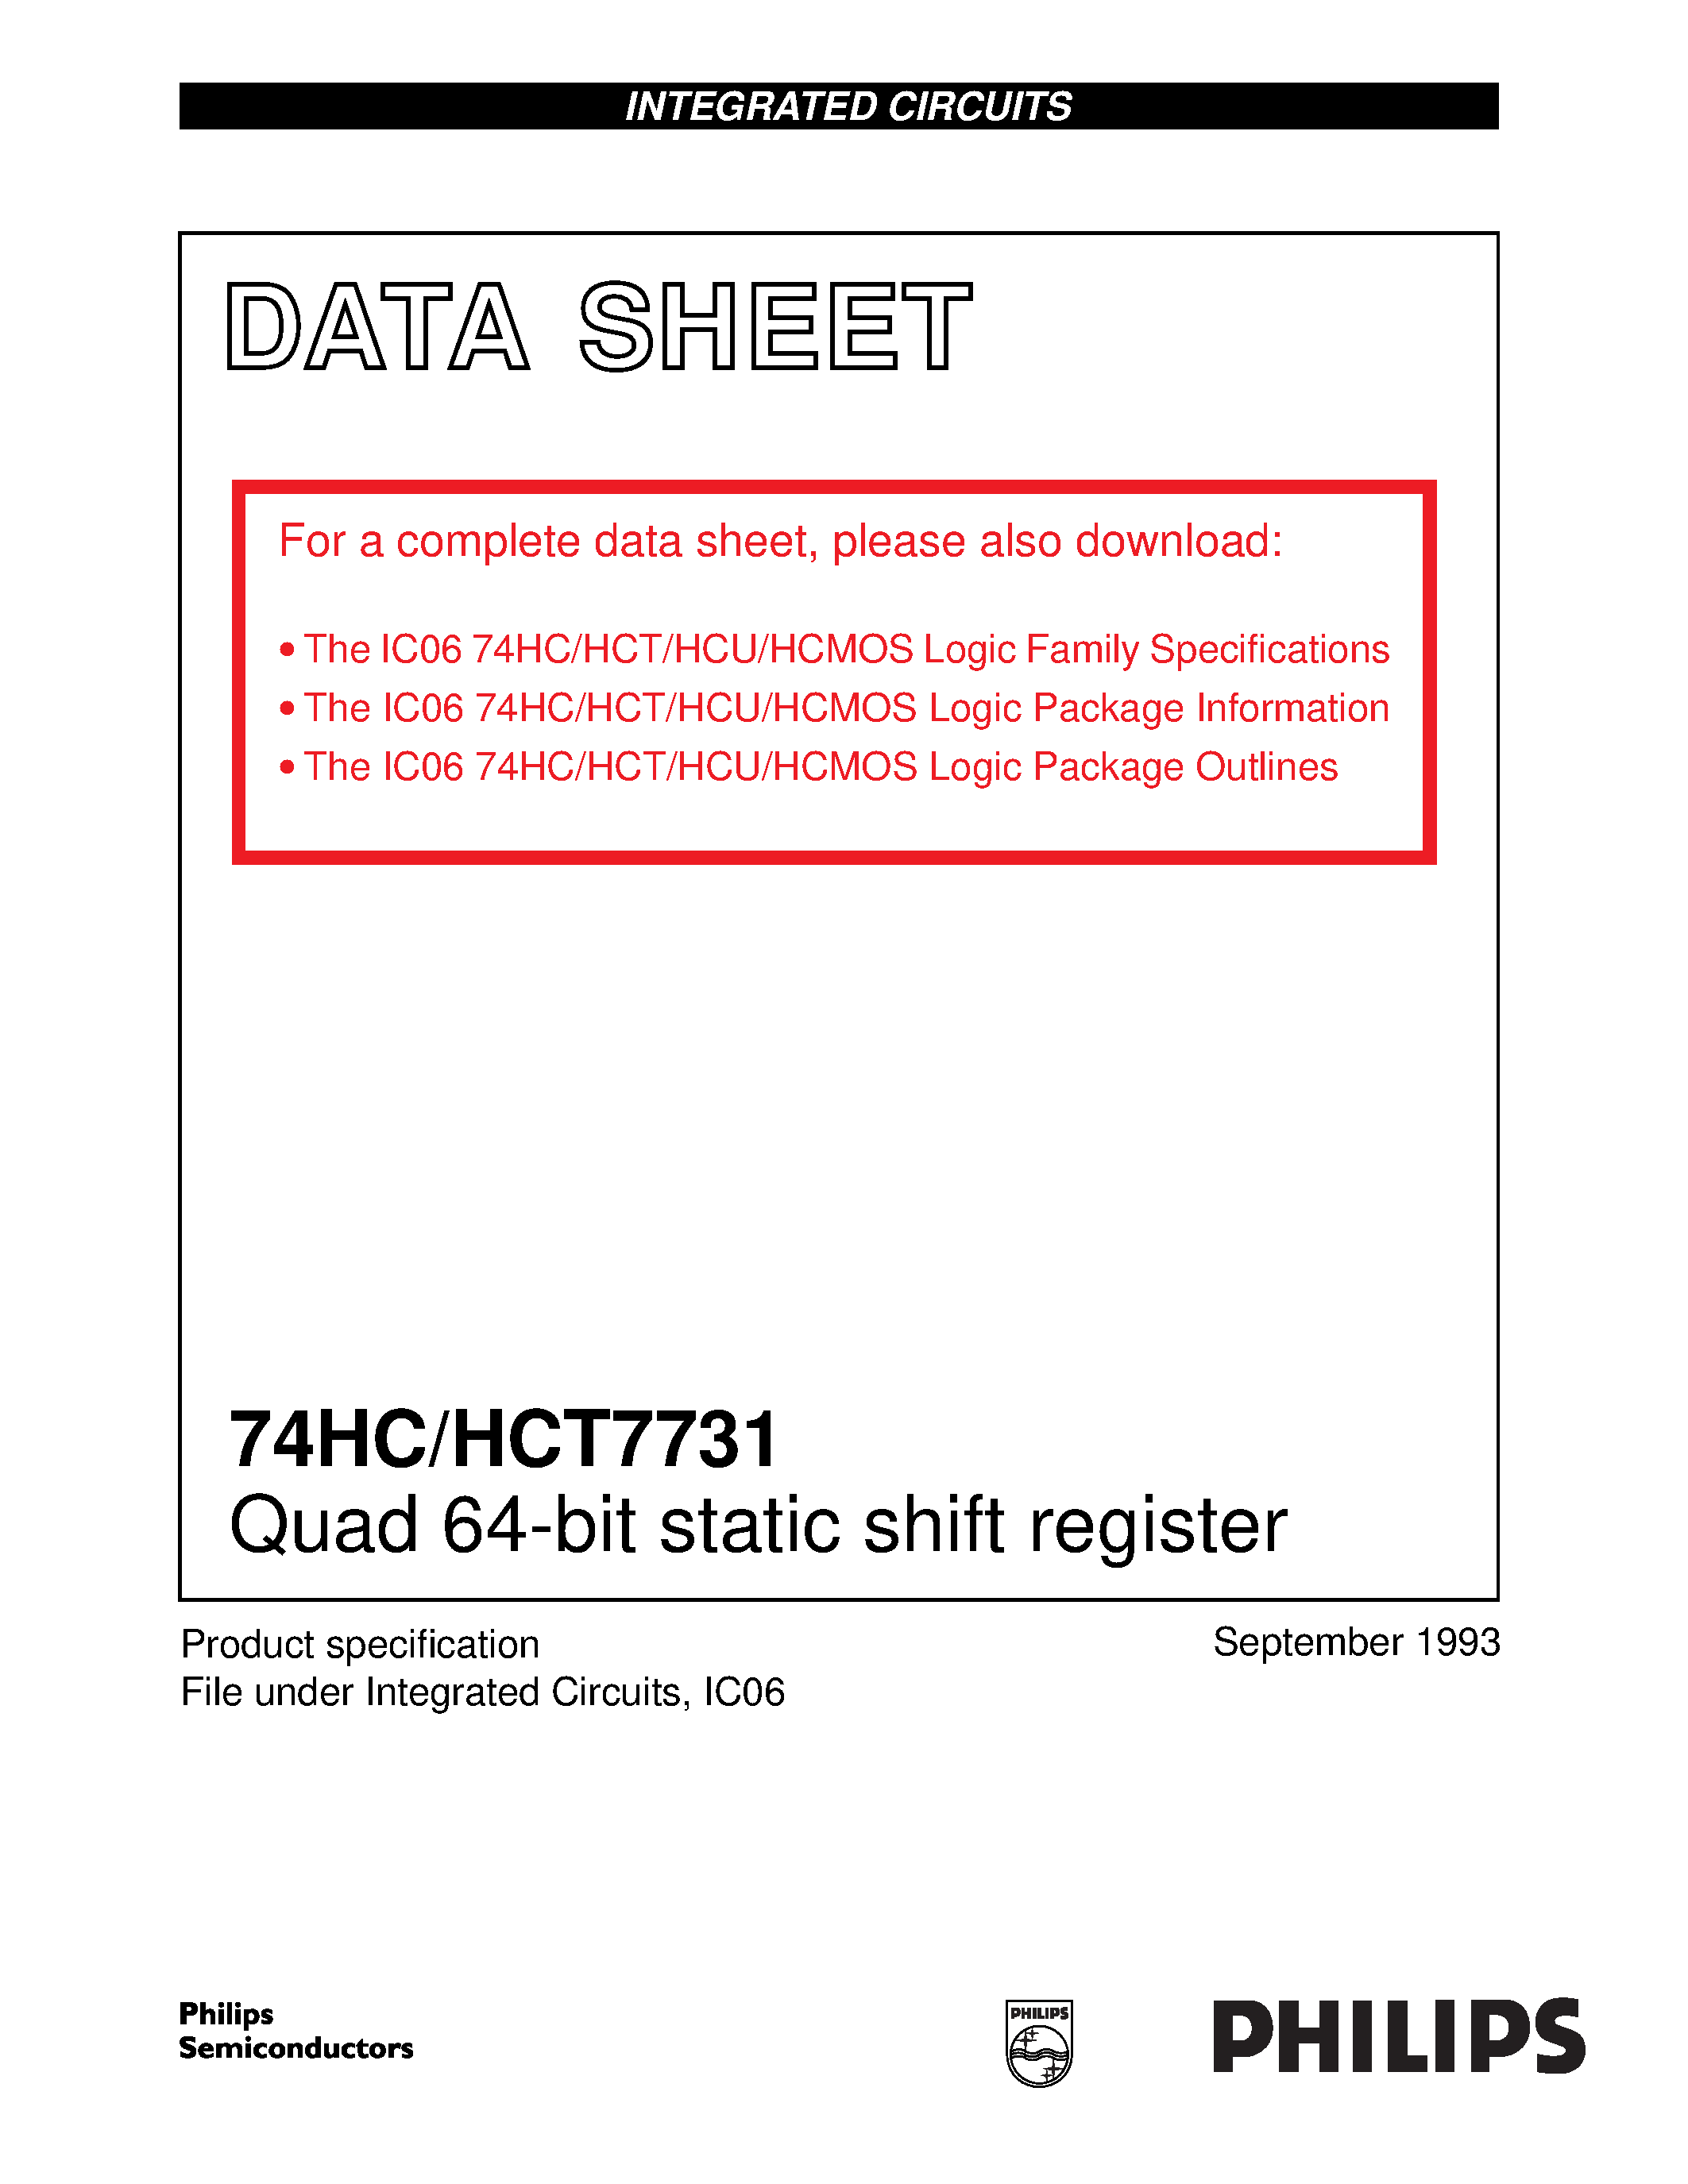 Datasheet 74HCT7731 - Quad 64-bit static shift register page 1